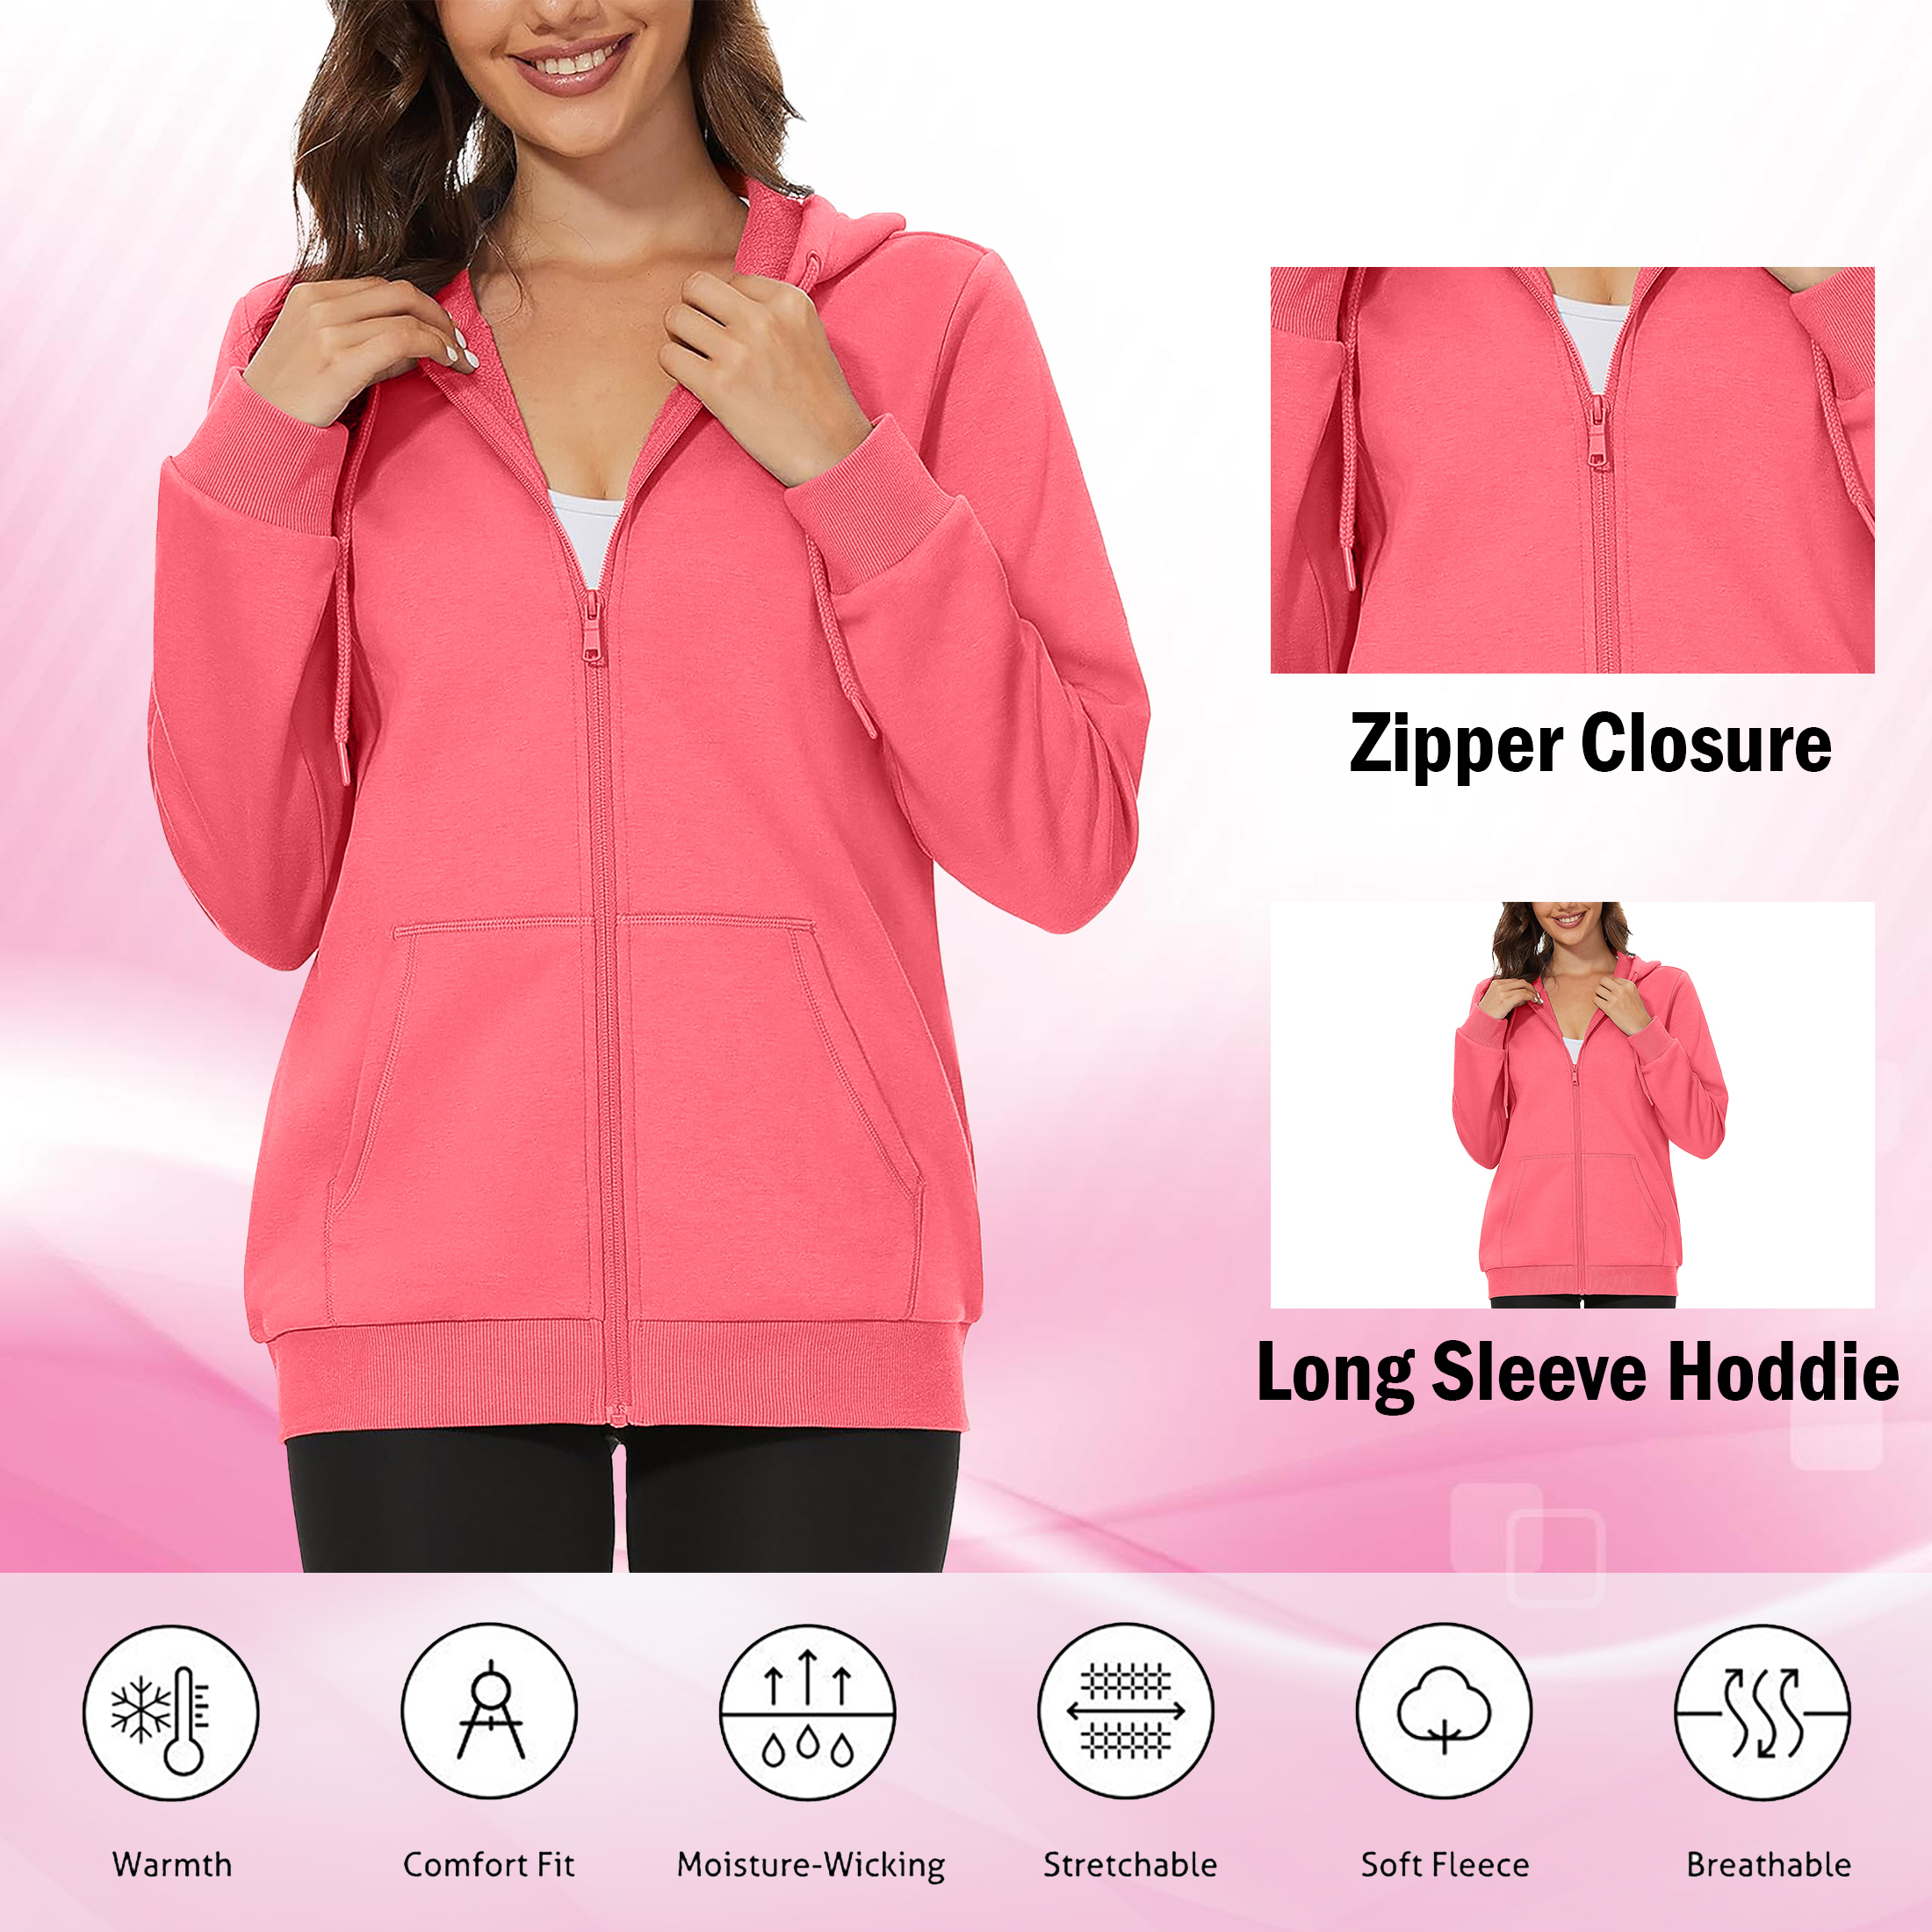 Multi-Pack: Women's Winter Warm Soft Blend Fleece Lined Full Zip Up Hoodie - 2-pack, Medium